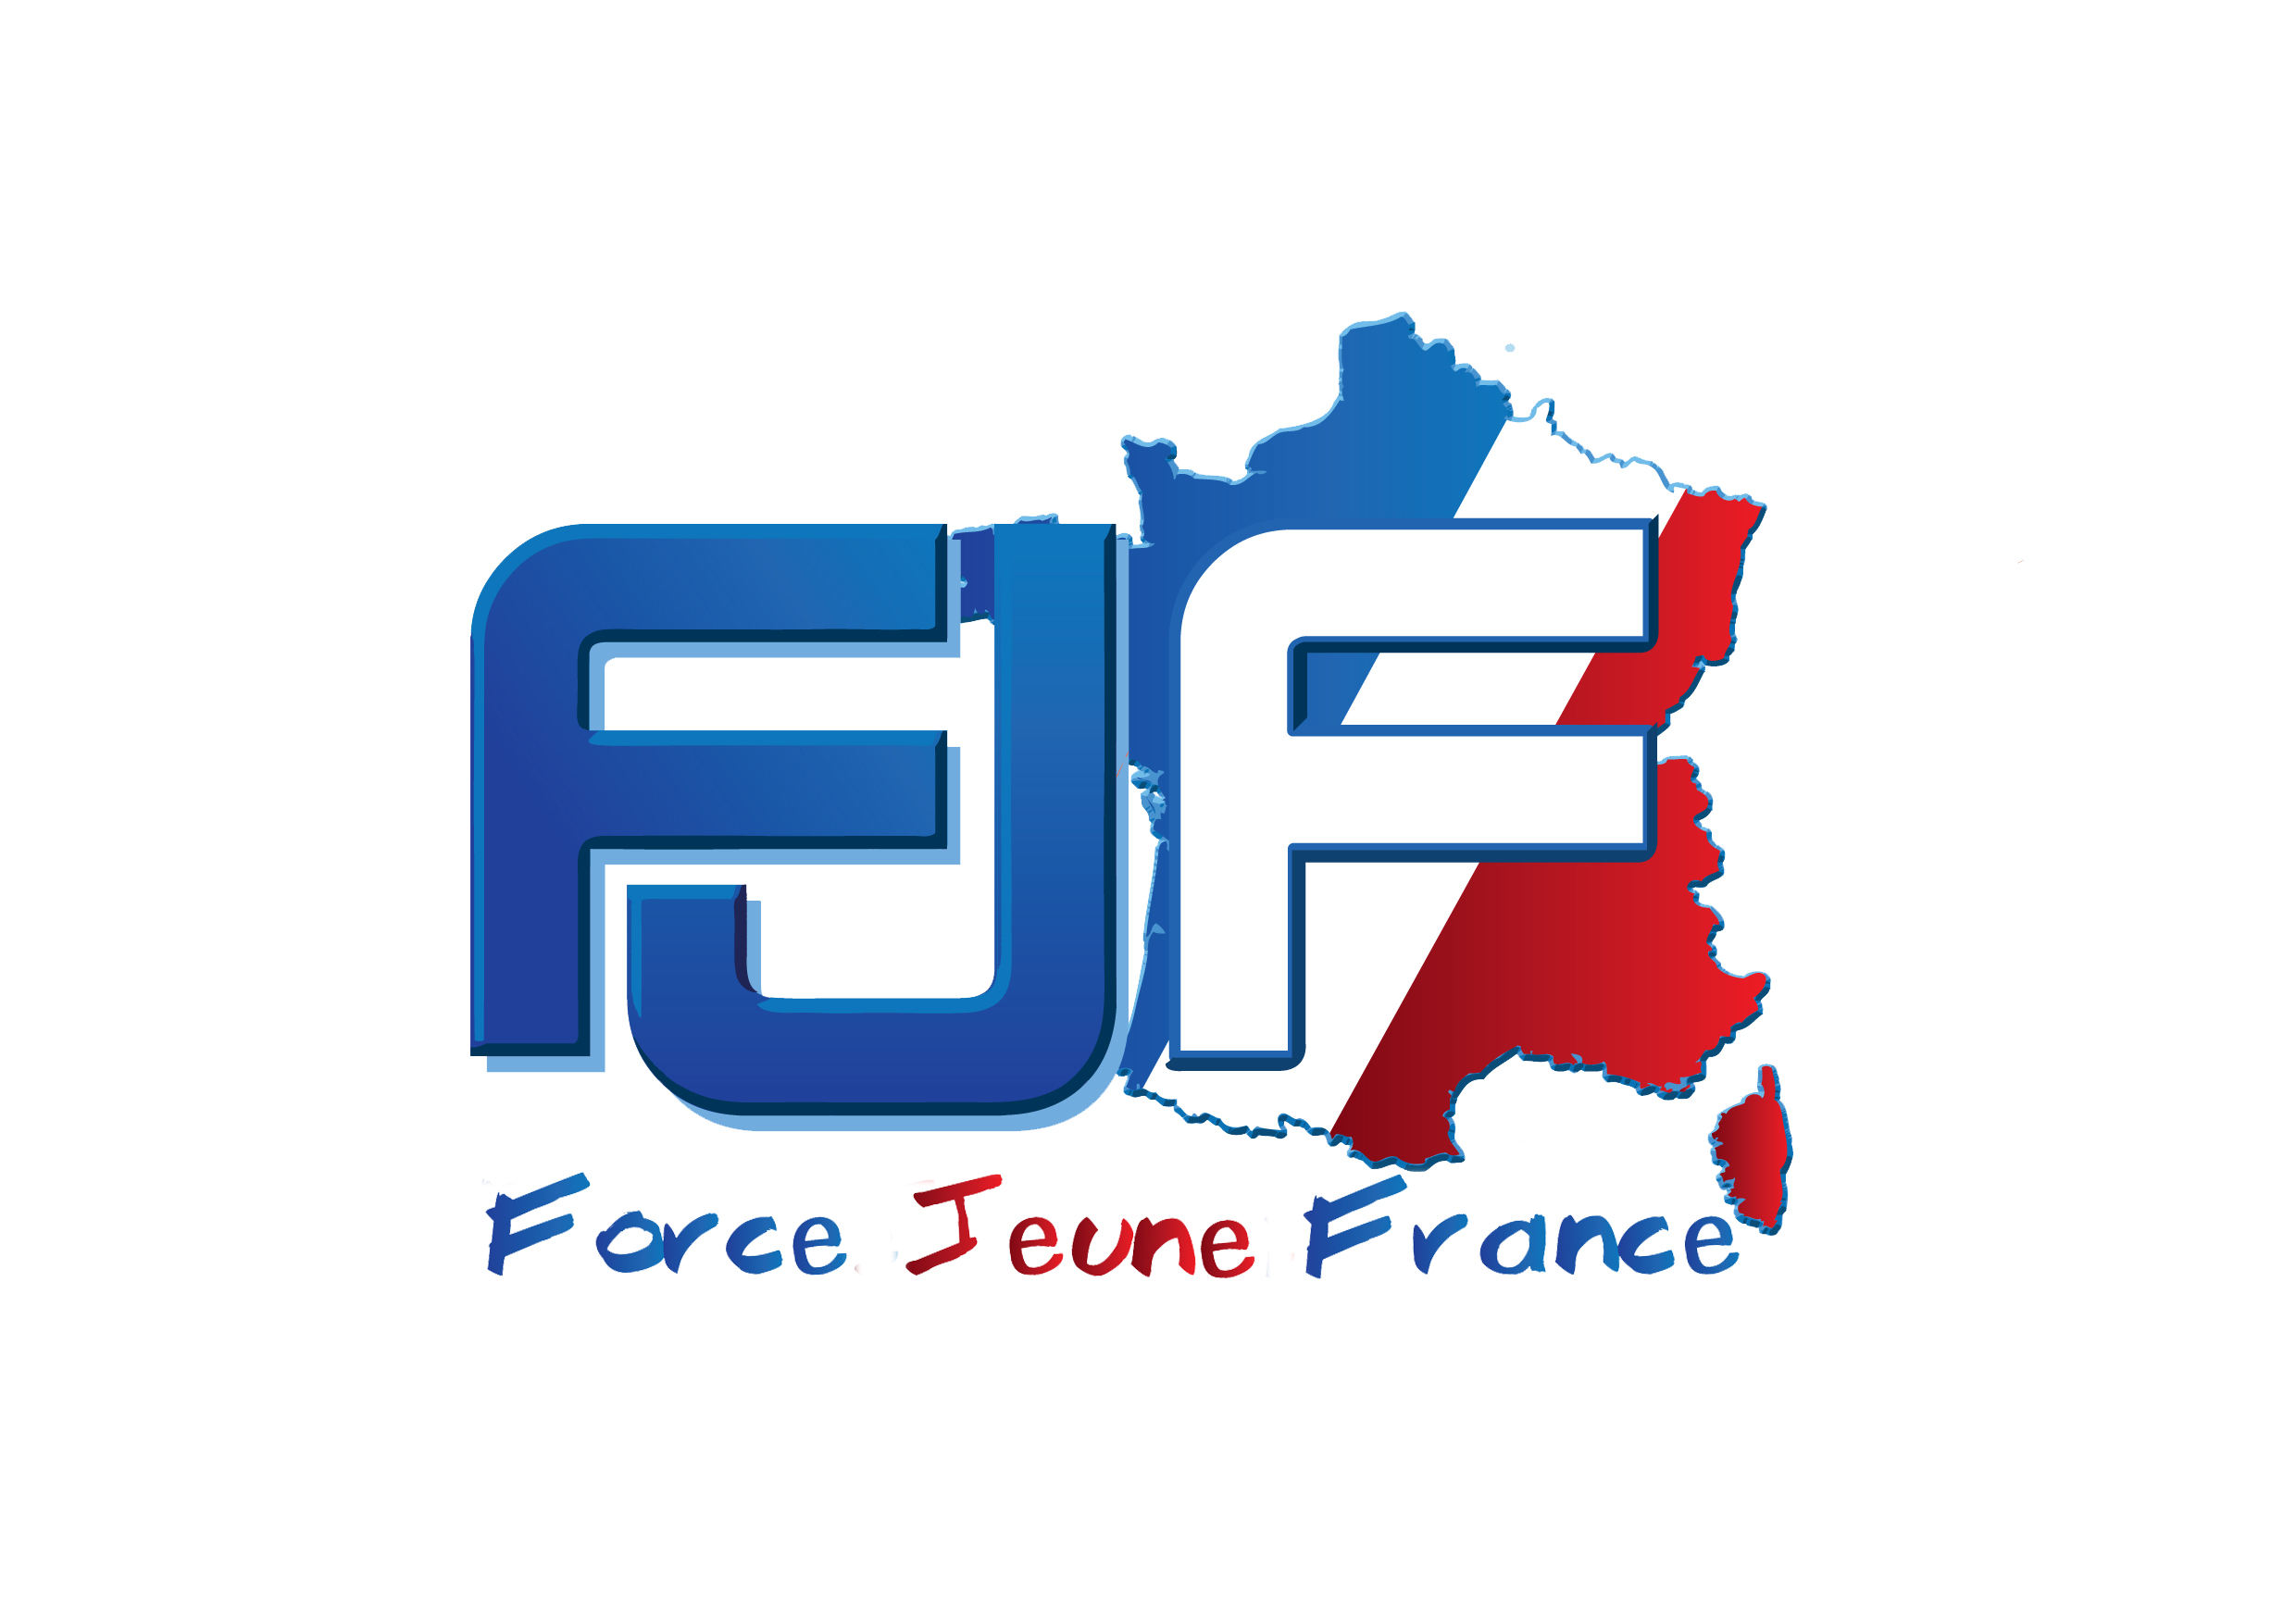 Force Jeune France (FJF)